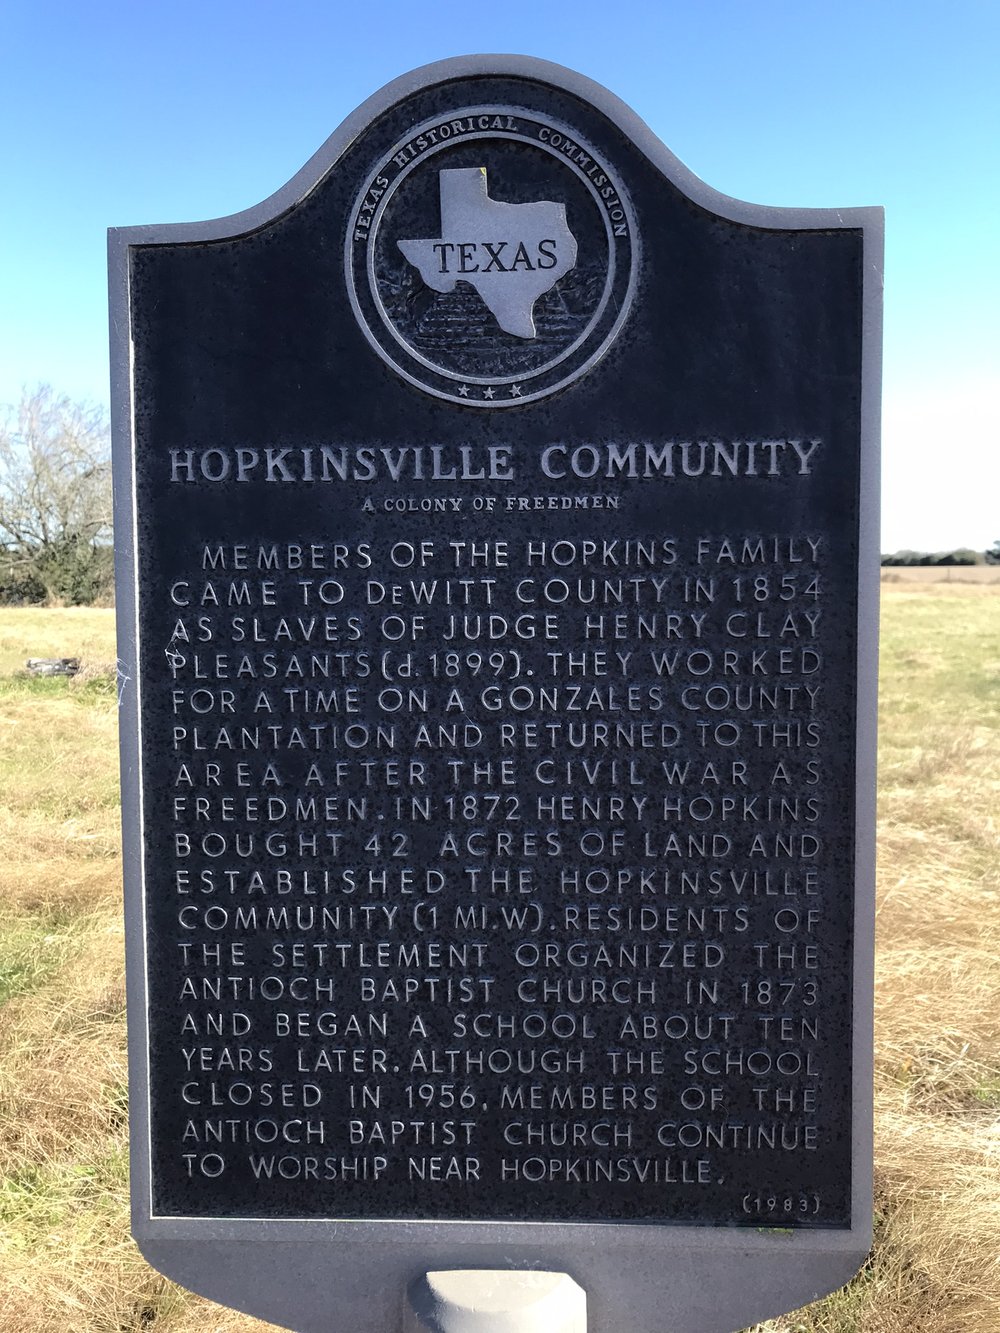 	Hopkinsville Community, A Colony of Freedmen